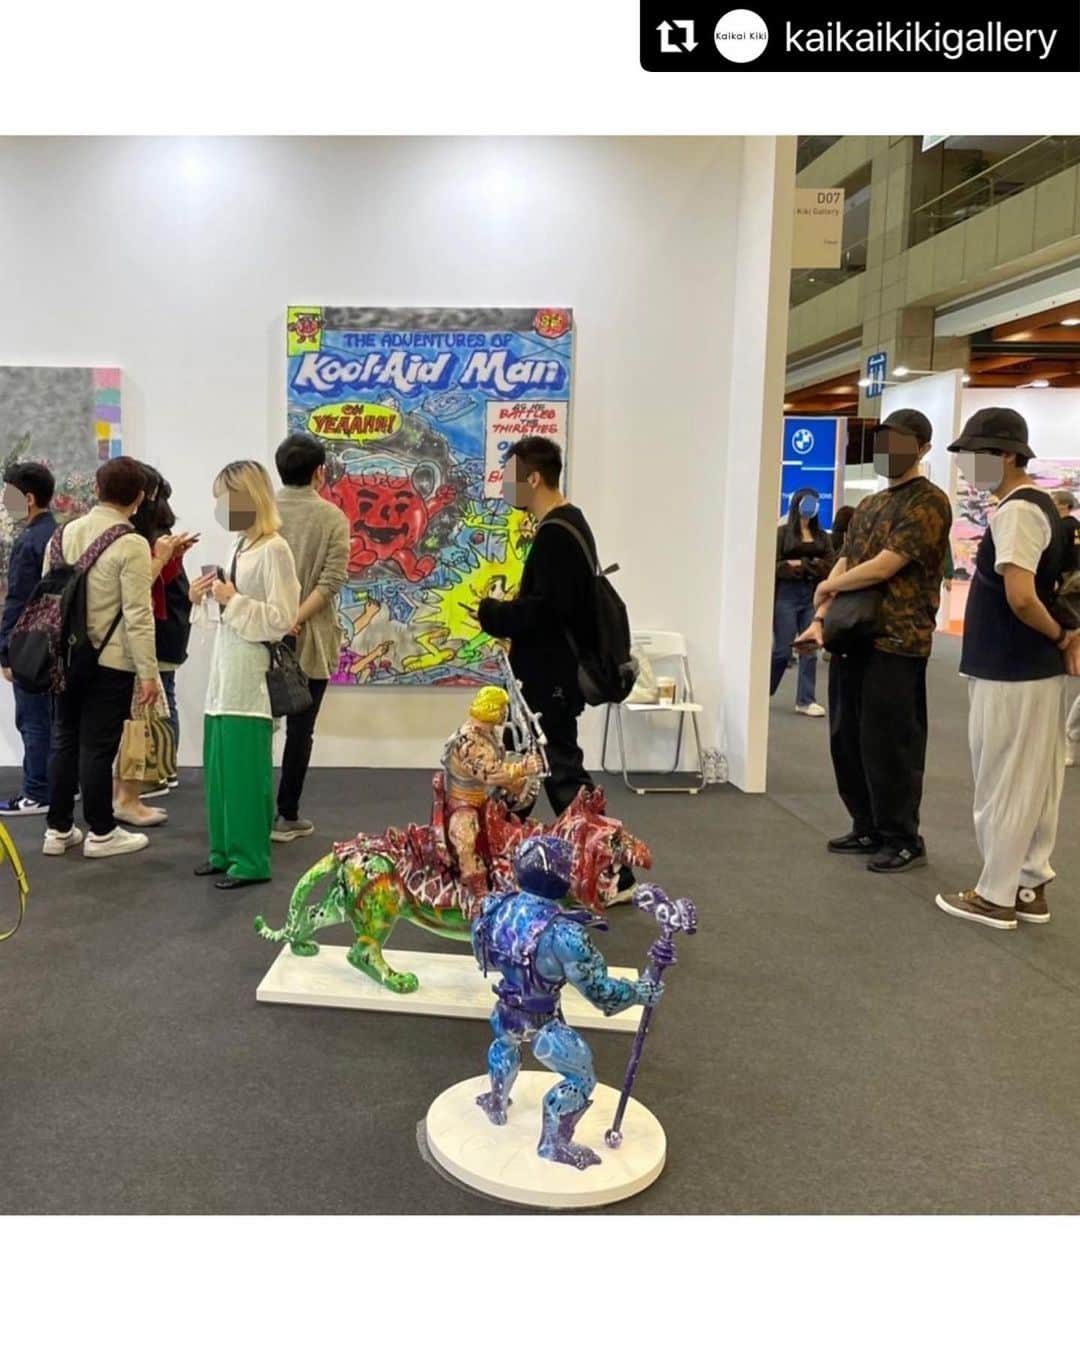 江口寿史のインスタグラム：「#Repost @kaikaikikigallery with @make_repost ・・・ Kaikai Kiki Gallery @kaikaikikigallery is participating in the ongoing art fair Taipei Dangdai 2022 @taipeidangdai .  Yesterday, the first day of the fair, Kaikai Kiki Gallery's booth attracted crowds of visitors. The booth at the fair featured a variety of works, including a painting by manga artist Hisashi Eguchi @egutihisasi @eguchiworks , who has made his first appearance with his artwork at this fair, the "Sleeping Child" series by Otani Workshop @ota539 with its adorable rotund forms, and oil paintings by Hideyasu Moto @hideyasu_moto , whose vivid colors and surrealistic worldview captivate the visitors attention to his storytelling pieces.  Tomorrow is the last day of Taipei Dandai 2022. Please visit "Taipei Connections," where you can view the works online on the fair's website. https://taipeidangdai.com/2022-gallery/kaikai-kiki-gallery/ . . カイカイキキギャラリー @kaikaikikigallery は、現在開催中のアートフェア・台北ダンダイ2022 @taipeidangdai に参加しております。  フェア1日目となる昨日も、カイカイキキギャラリーのブースには大変多くの方にお越しいただきました。 今回が初披露となった漫画家の江口寿史氏 @egutihisasi @eguchiworks の大型絵画作品に、ぽってりとしたフォルムが愛らしい大谷工作室 @ota539 の「寝る子」シリーズ、色鮮やかでシュールな世界観が魅力的な本秀康氏 @hideyasu_moto のオイルペインティングなど、現地のブースでは様々な作品をご覧いただけます。  台北ダンダイ2022は明日が最終日です。オンラインから作品をご覧いただける「Taipei Connections」も、フェアのWEBサイトよりご覧いただけますので、ぜひアクセスしてみてください。 https://taipeidangdai.com/2022-gallery/kaikai-kiki-gallery/ . . Taipei Dangdai 2022 Booth: D07 20 -22 May, 2022 *19 May：VIP Preview Venue: Taipei World Trade Center Hall 1 taipeidangdai.com . . ©MADSAKI/Otani Workshop/ob/Kaikai Kiki Co., Ltd. All Rights Reserved. ©︎VERDY ©︎Kasing Lung ©︎DABSMYLA ©︎Hideyasu Moto ©︎Shoko Nakazawa ©︎Hisashi Eguchi . #kaikaikikigallery #カイカイキキギャラリー#kaikaikiki #takashimurakami #taipei #taipeidangdai #madsaki #otaniworkshop #ob #VERDY #kasinglung #dabsmyla #hideyasumoto #shokonakazawa #hisashieguchi」